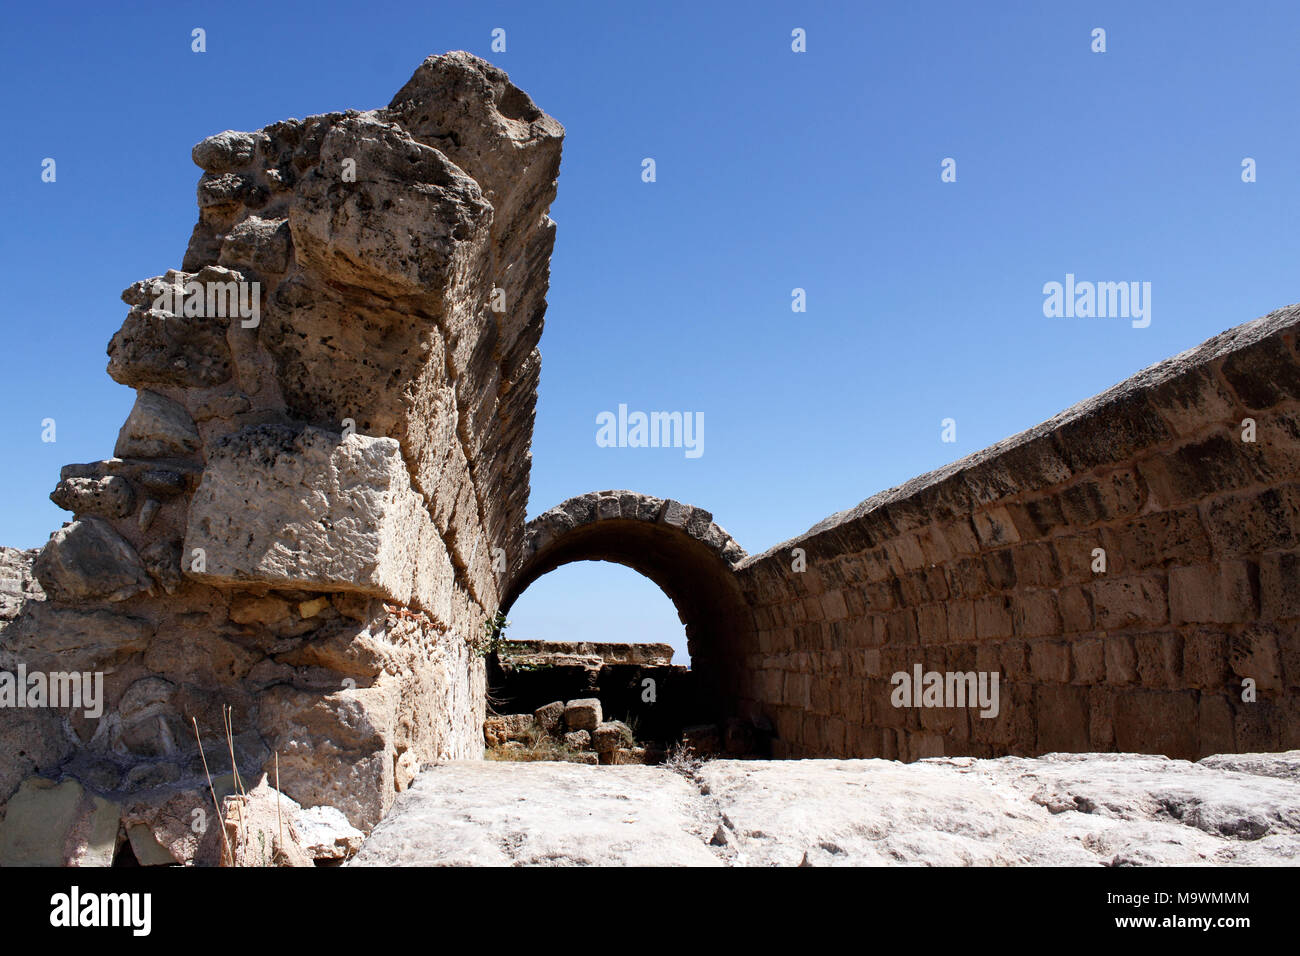 SALAMIS. ANCIENT ROMAN CITY RUINS. NORTHERN CYPRUS Stock Photo